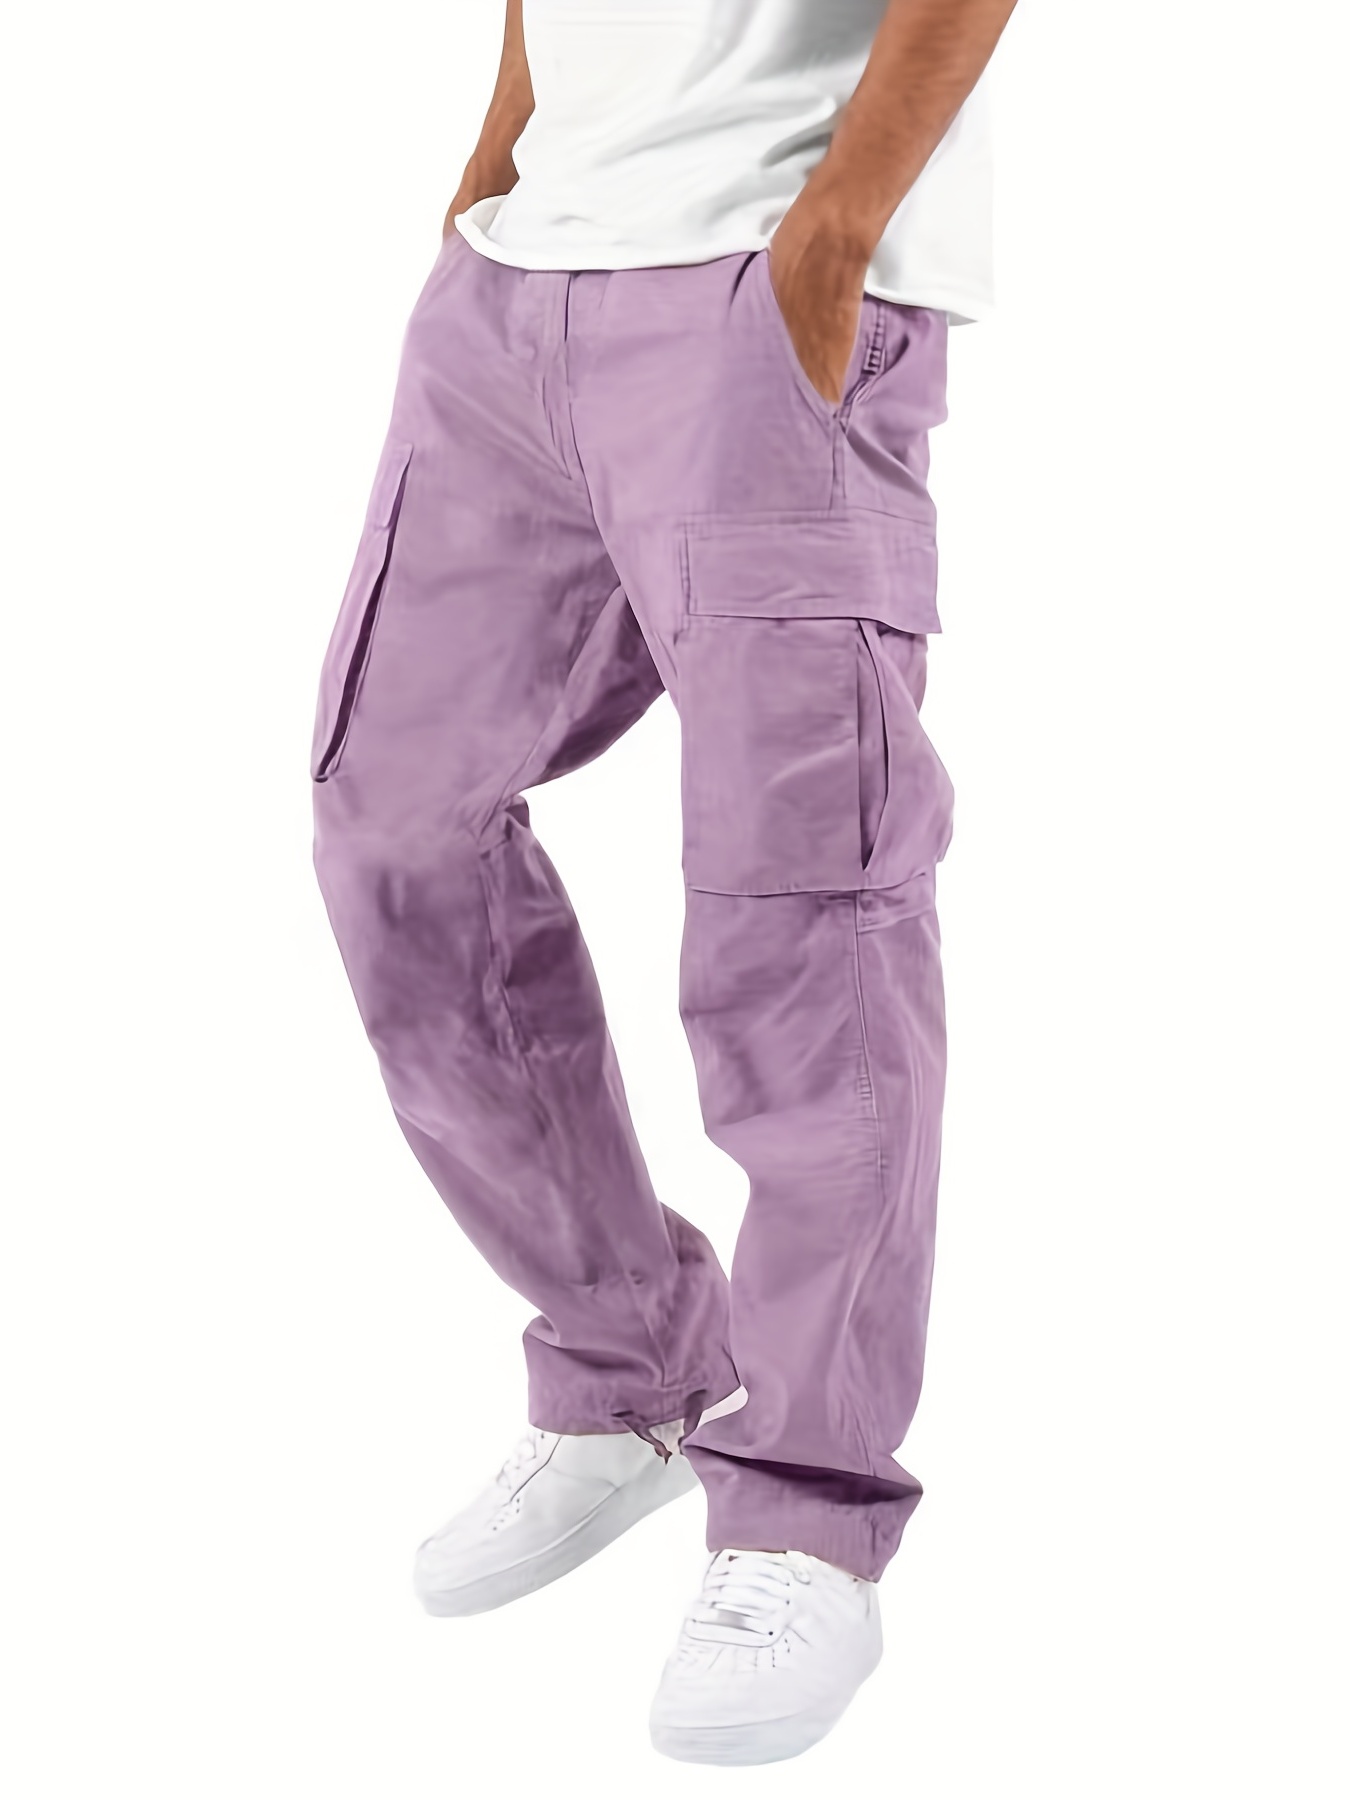 Penkiiy Cargo Pants for Men Men Solid Casual Multiple Pockets Outdoor  Straight Type Fitness Pants Cargo Pants Trousers Purple Men's Pants -  Walmart.com